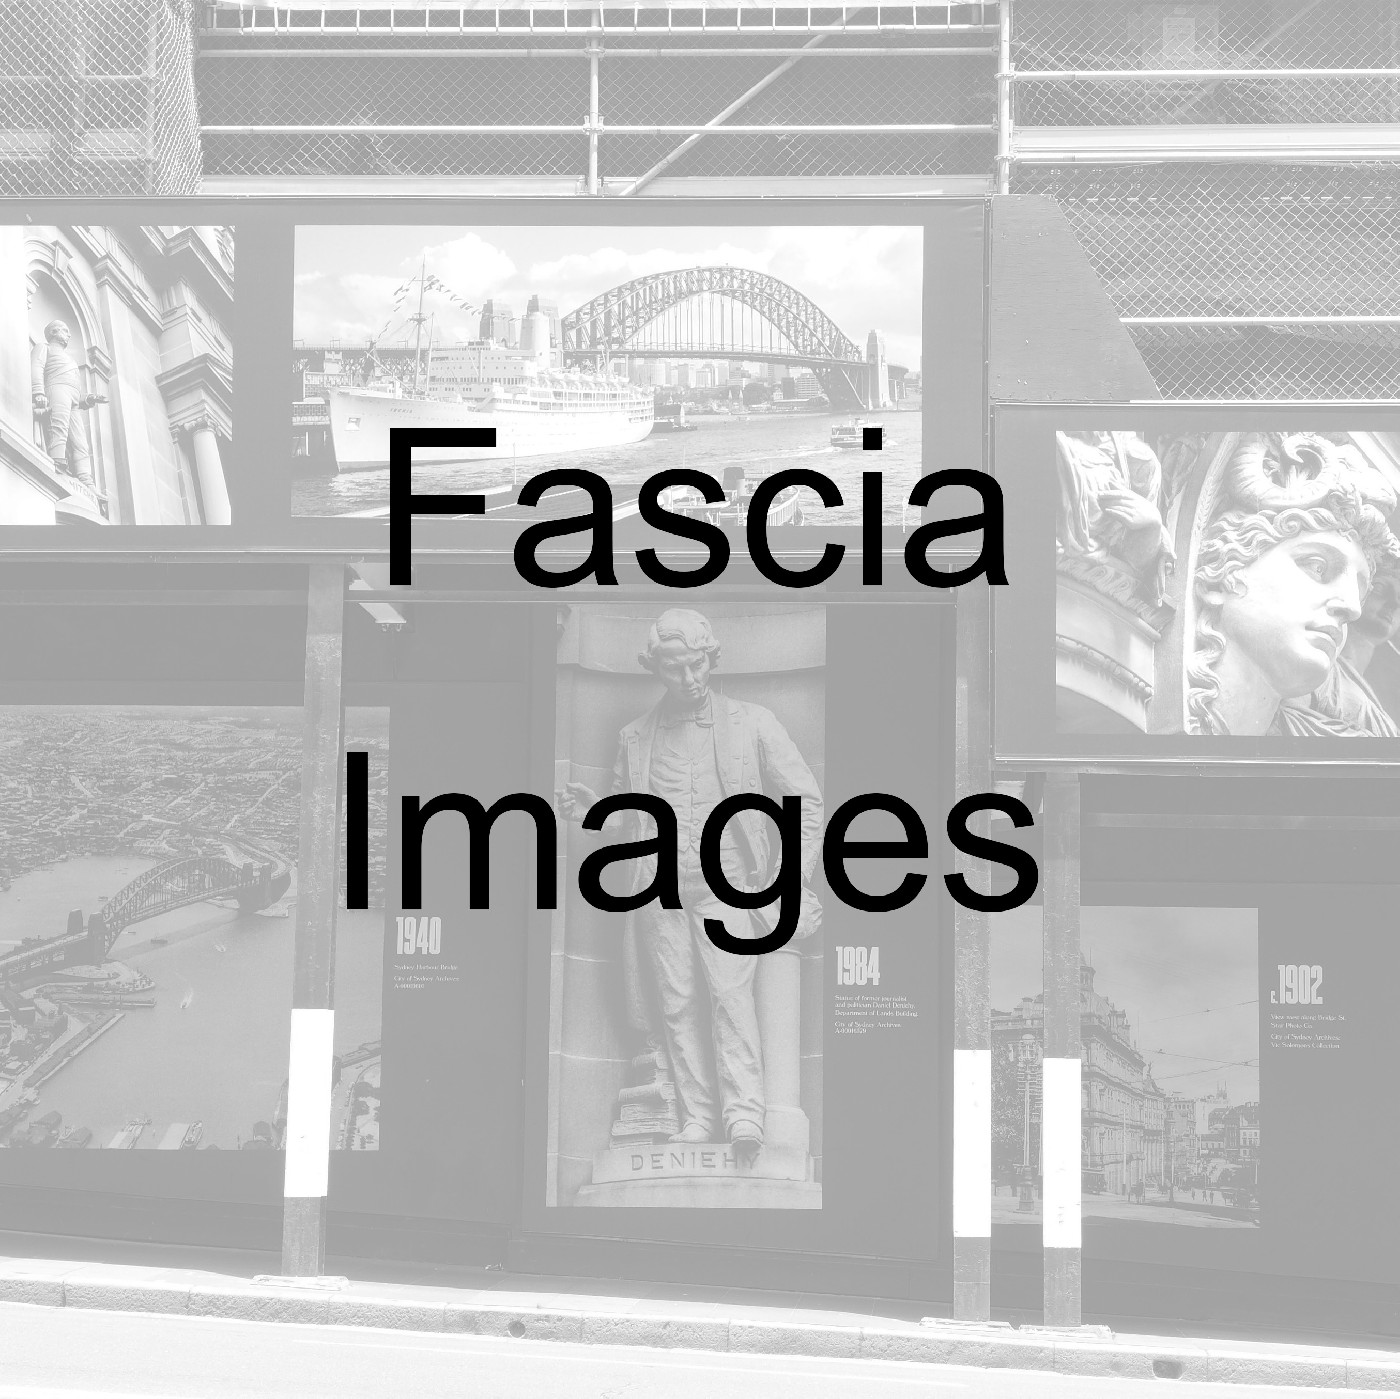 Martin Place - Fascia Images